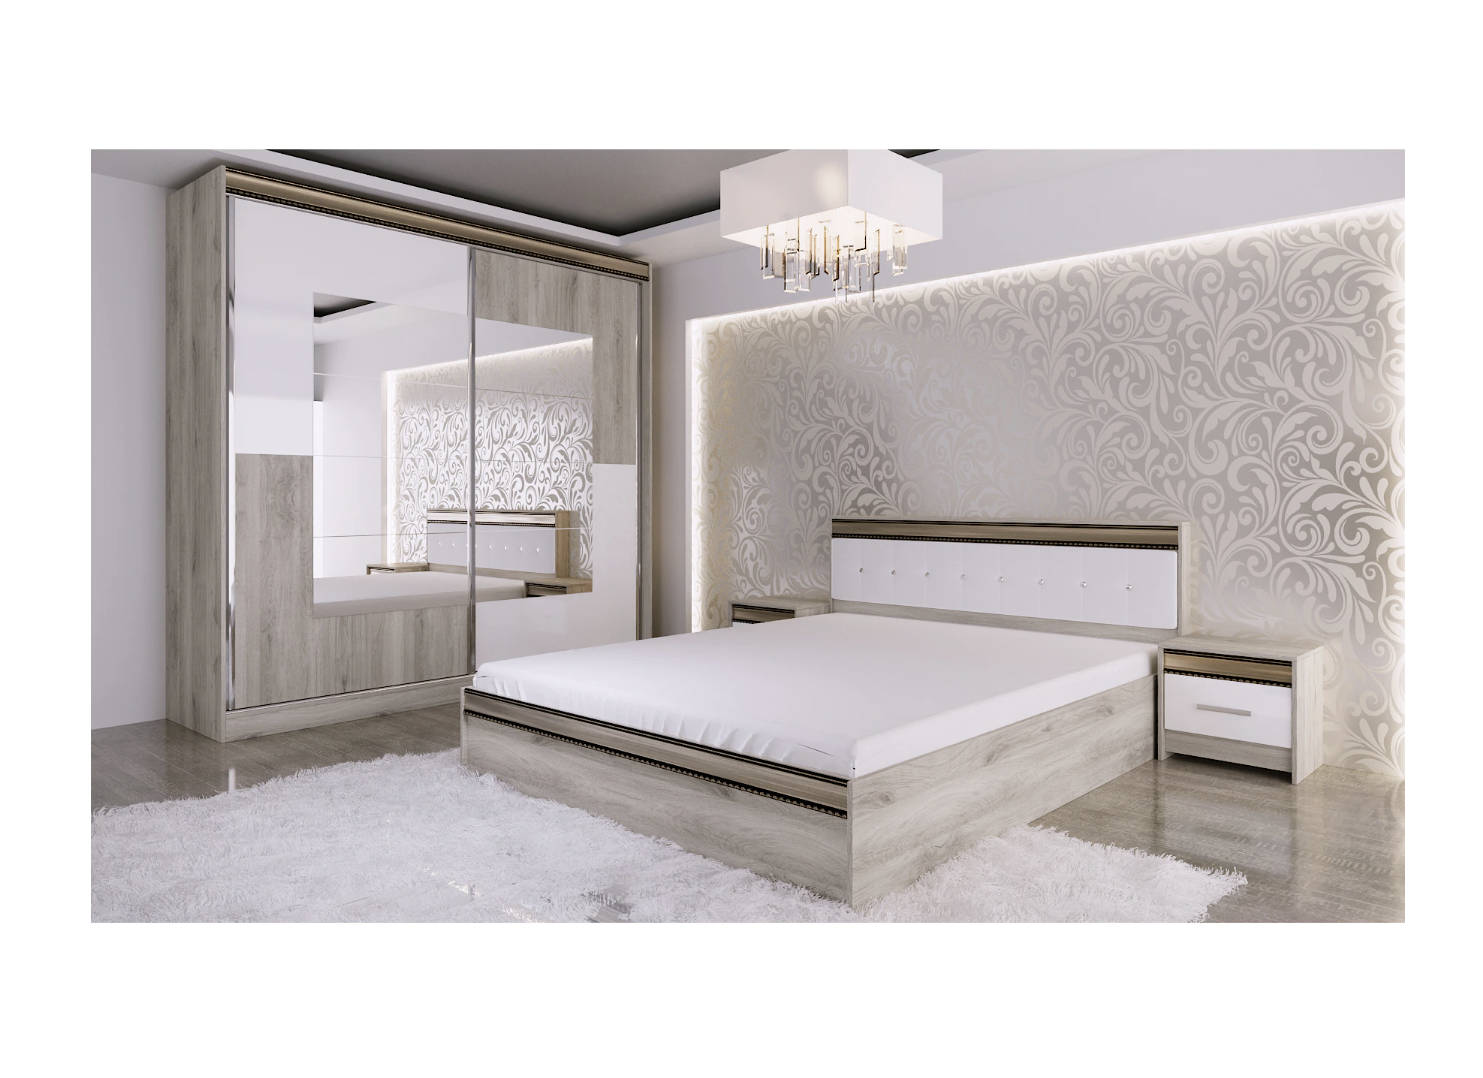 Soveværelse Irim Marina, Seng 160x200 cm, Garderobe, 2 natborde, Farve Sonoma/Hvid